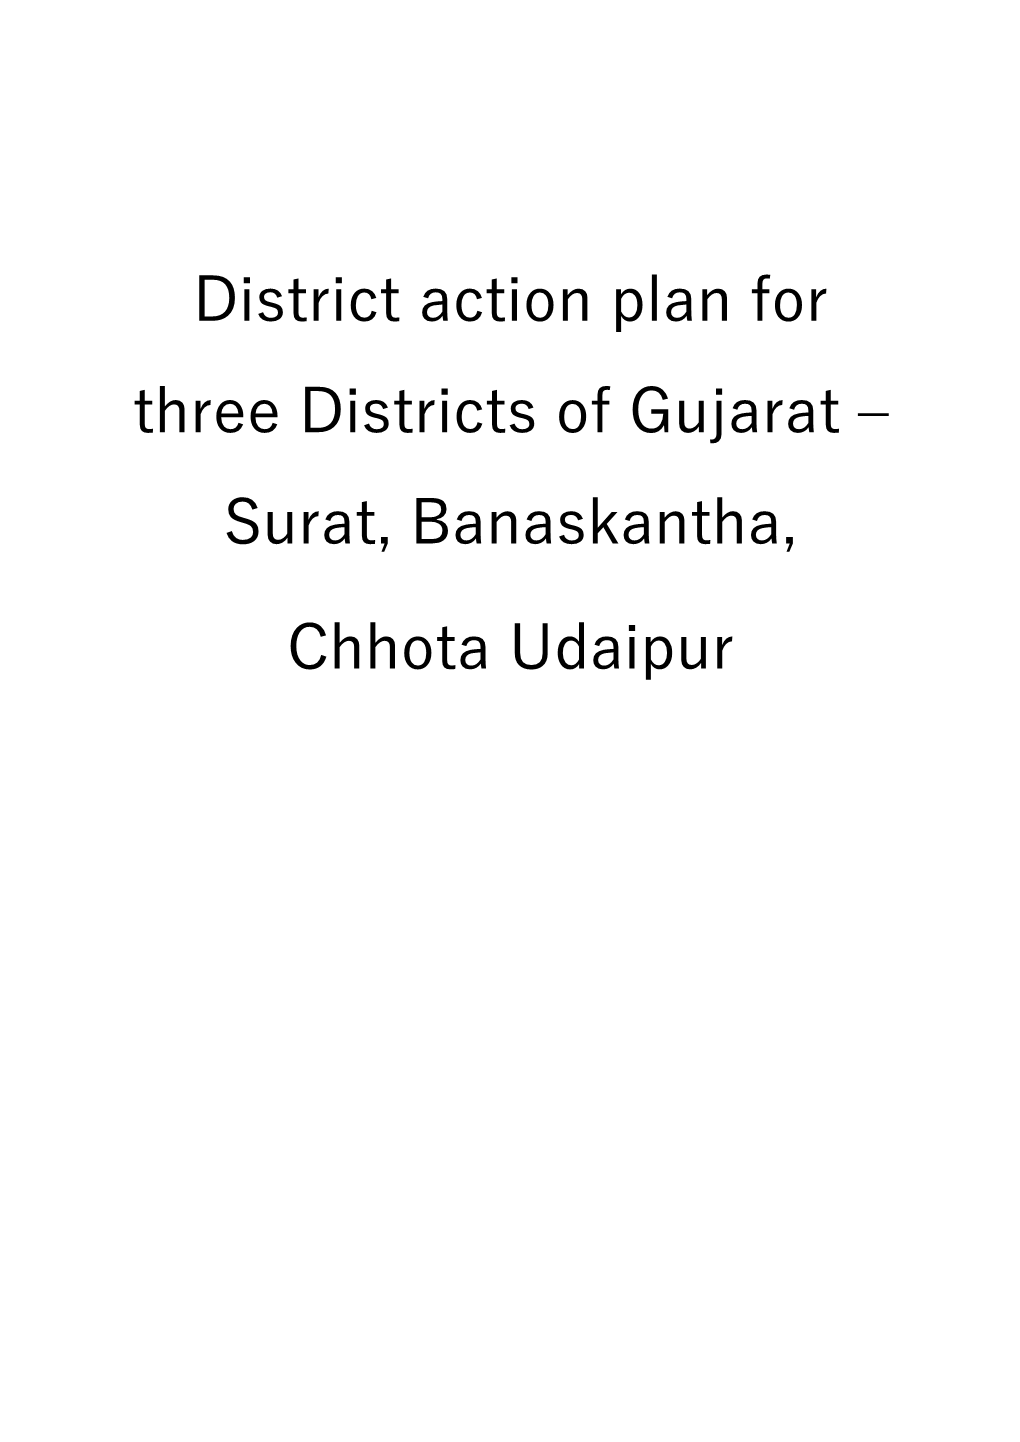 District Action Plan for Three Districts of Gujarat – Surat, Banaskantha